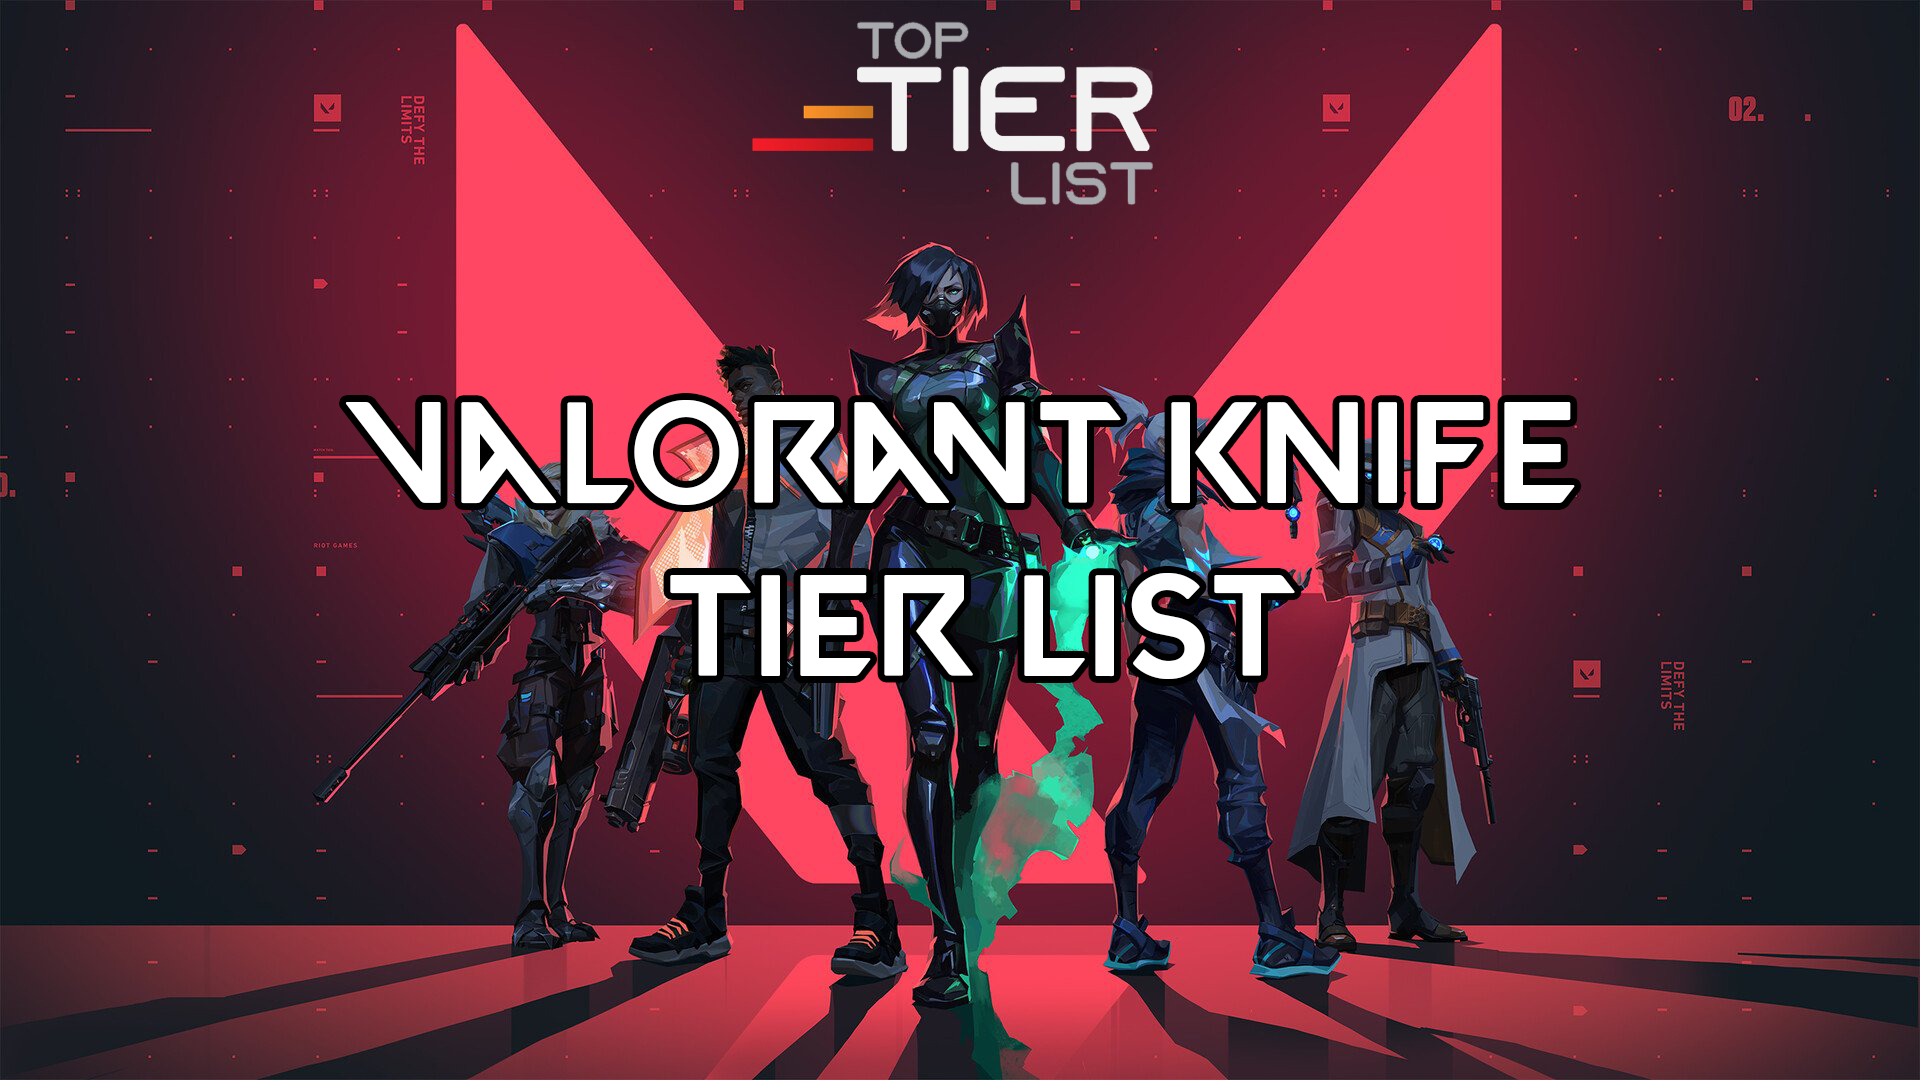 kxtieoh on X: valorant knife tier list what we thinkin   / X